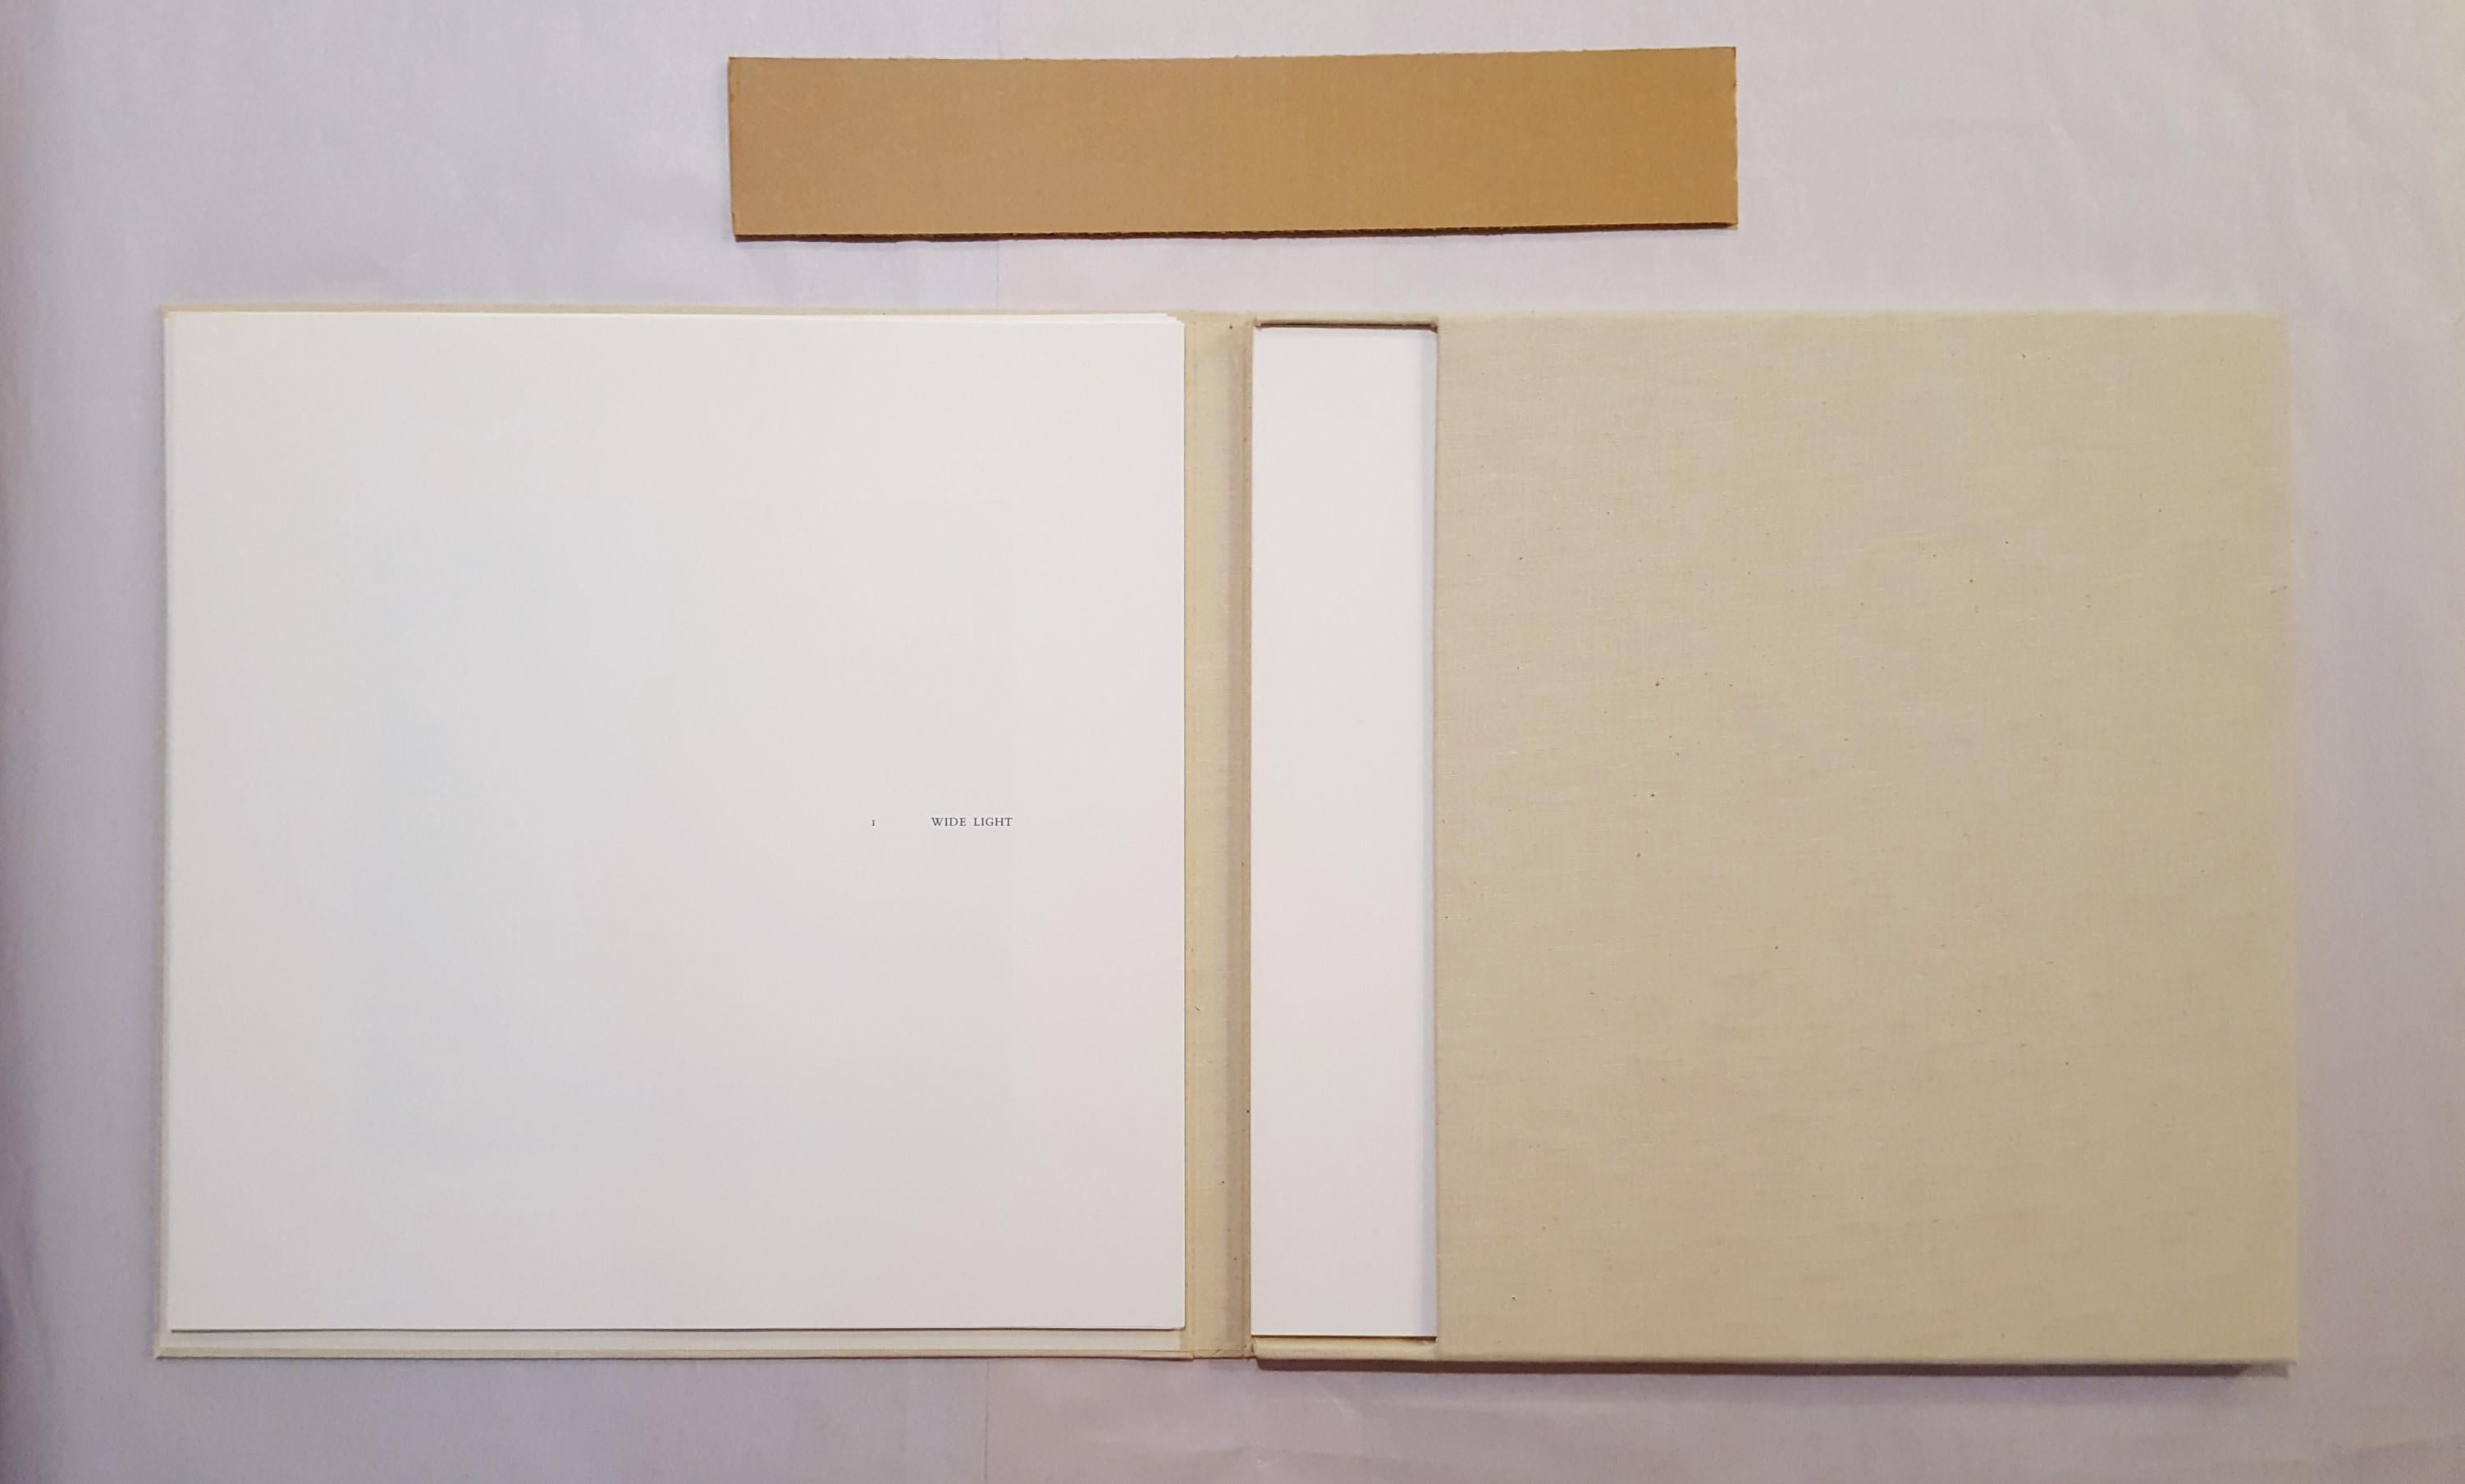 The complete boxed portfolio of 10 original screenprints on Mohawk Superfine Bristol paper by German-American artist Josef Albers (1888-1976) titled 